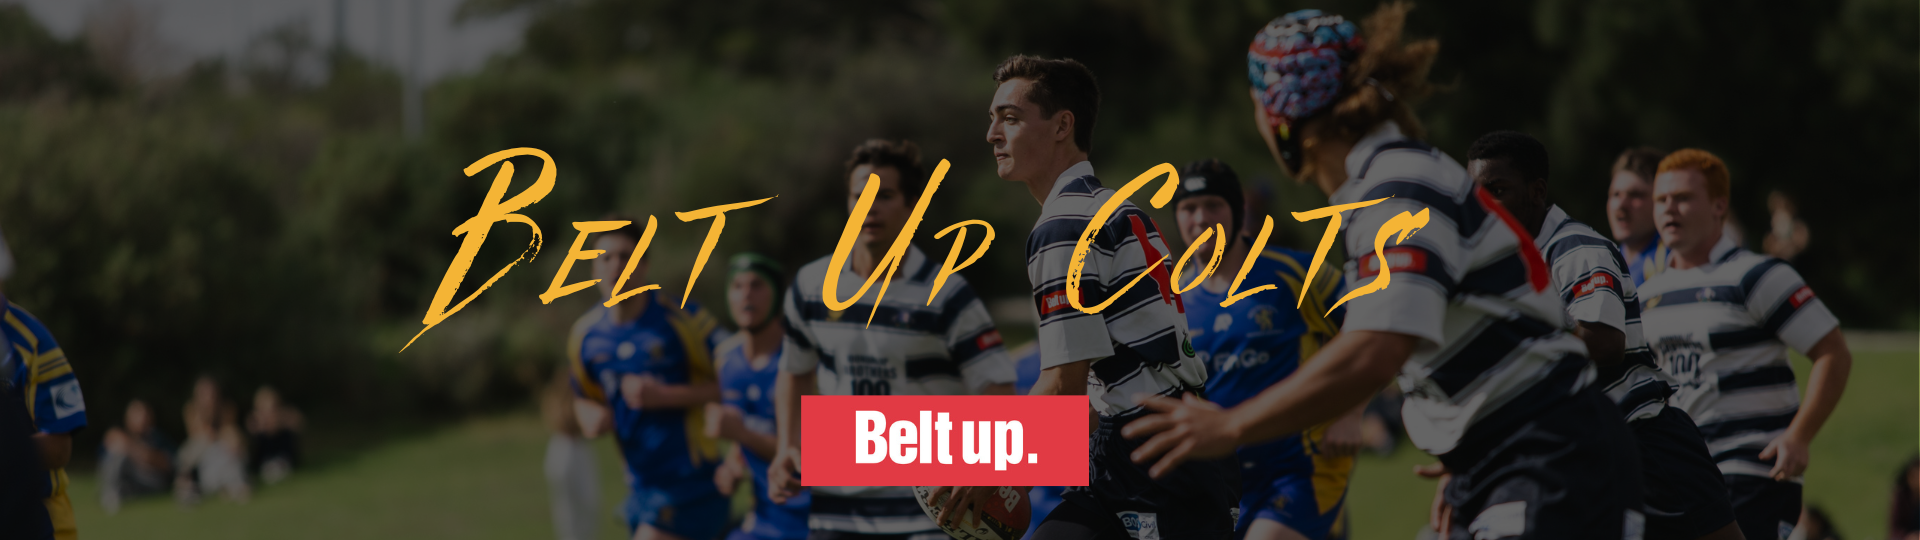 RugbyWA - Belt Up Colts 